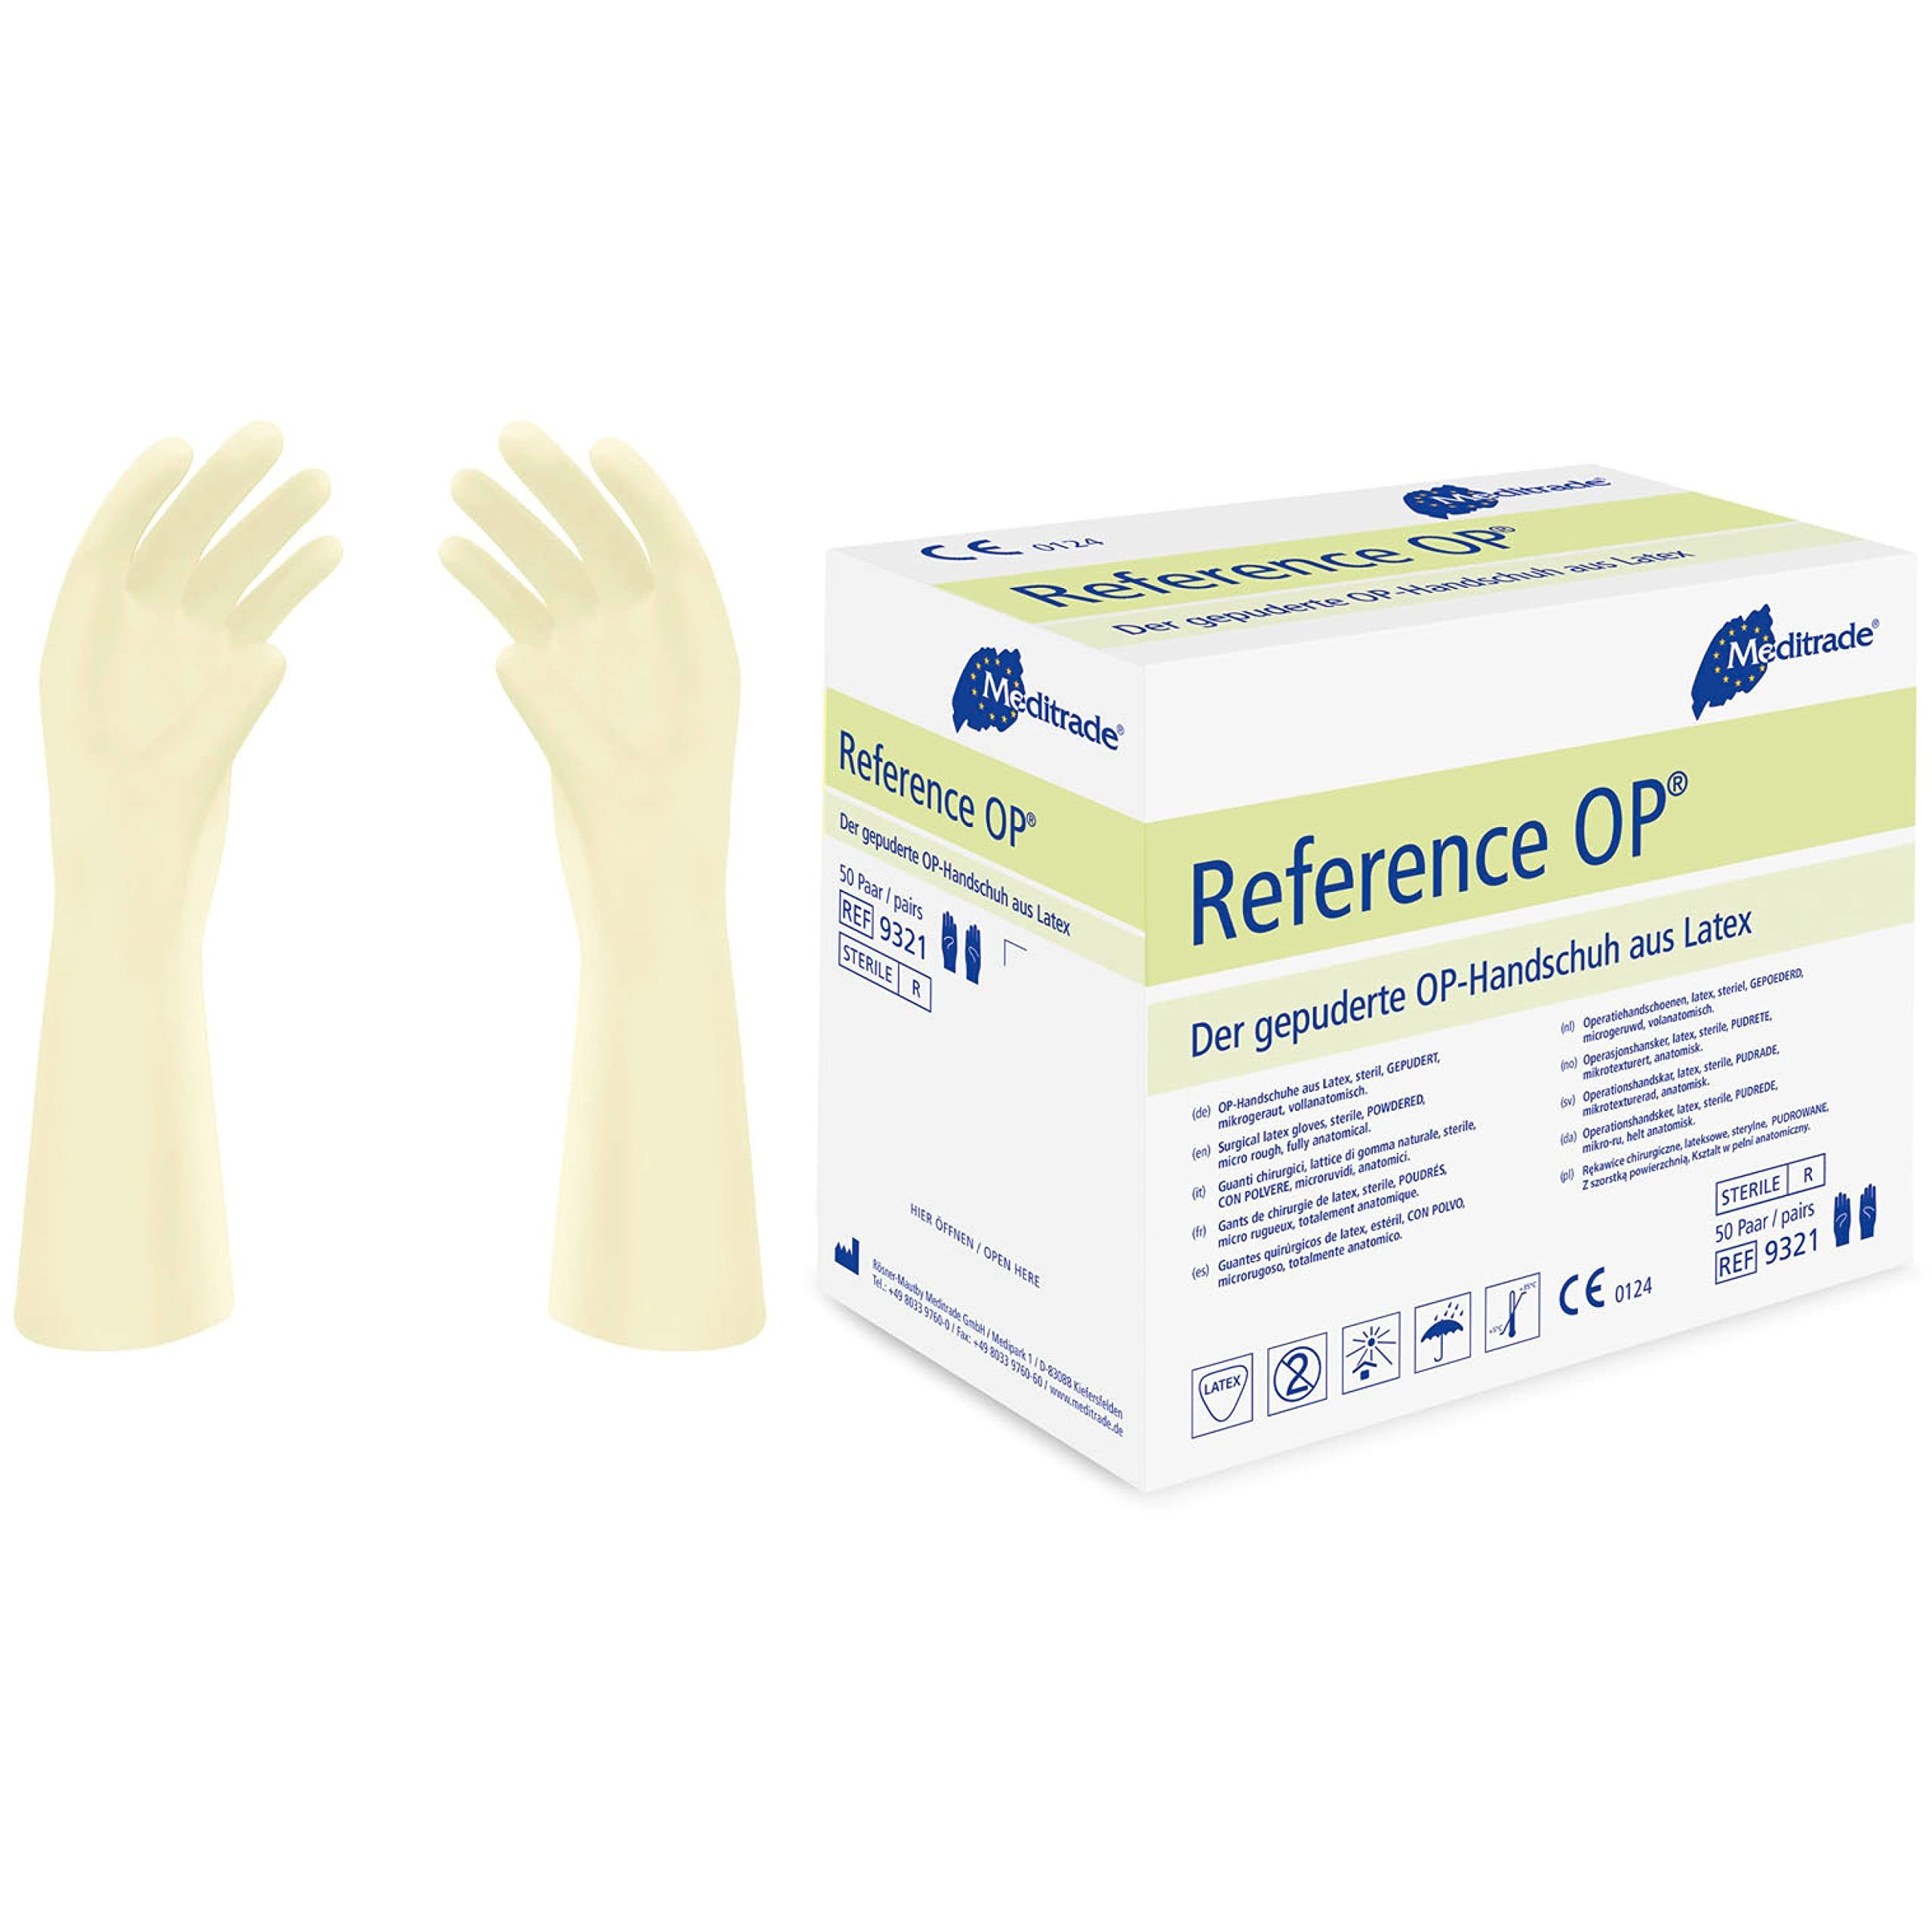 Gr. OPOP-Handschuh Latex, MediTrade Latexhandschuhe Reference™ 6,5 gepudert, aus